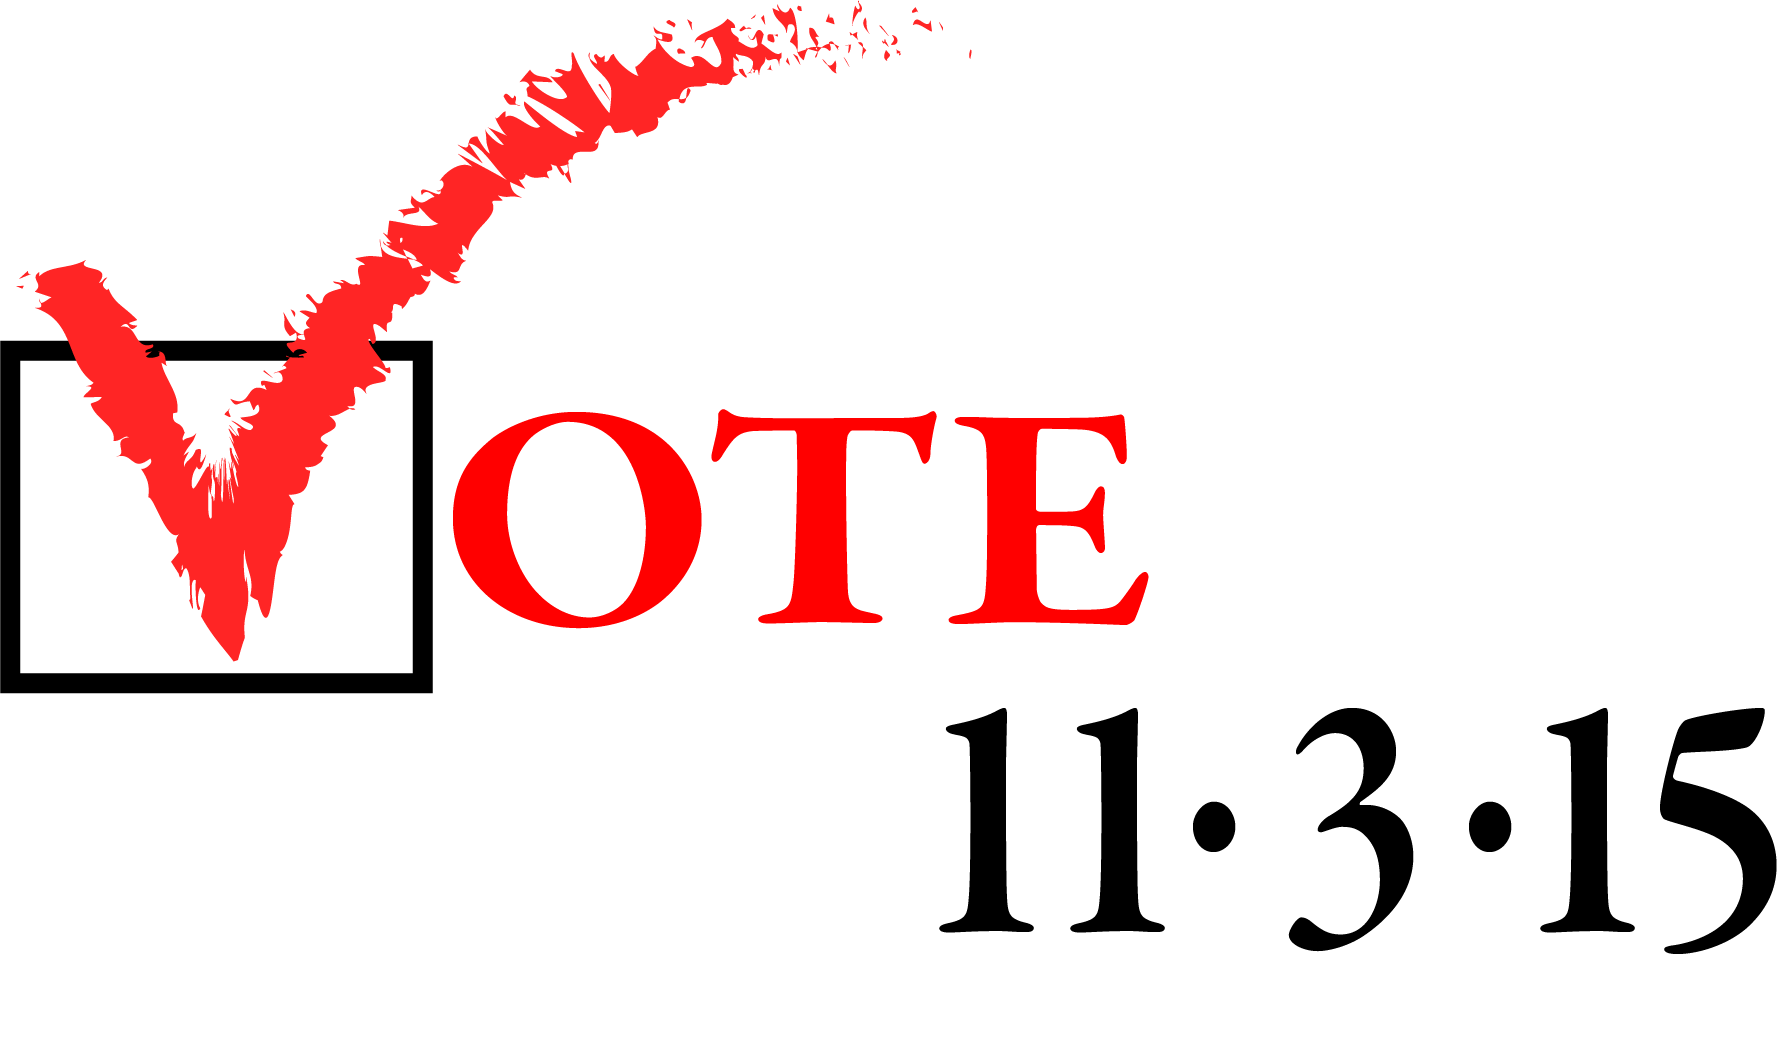 Vote 2015